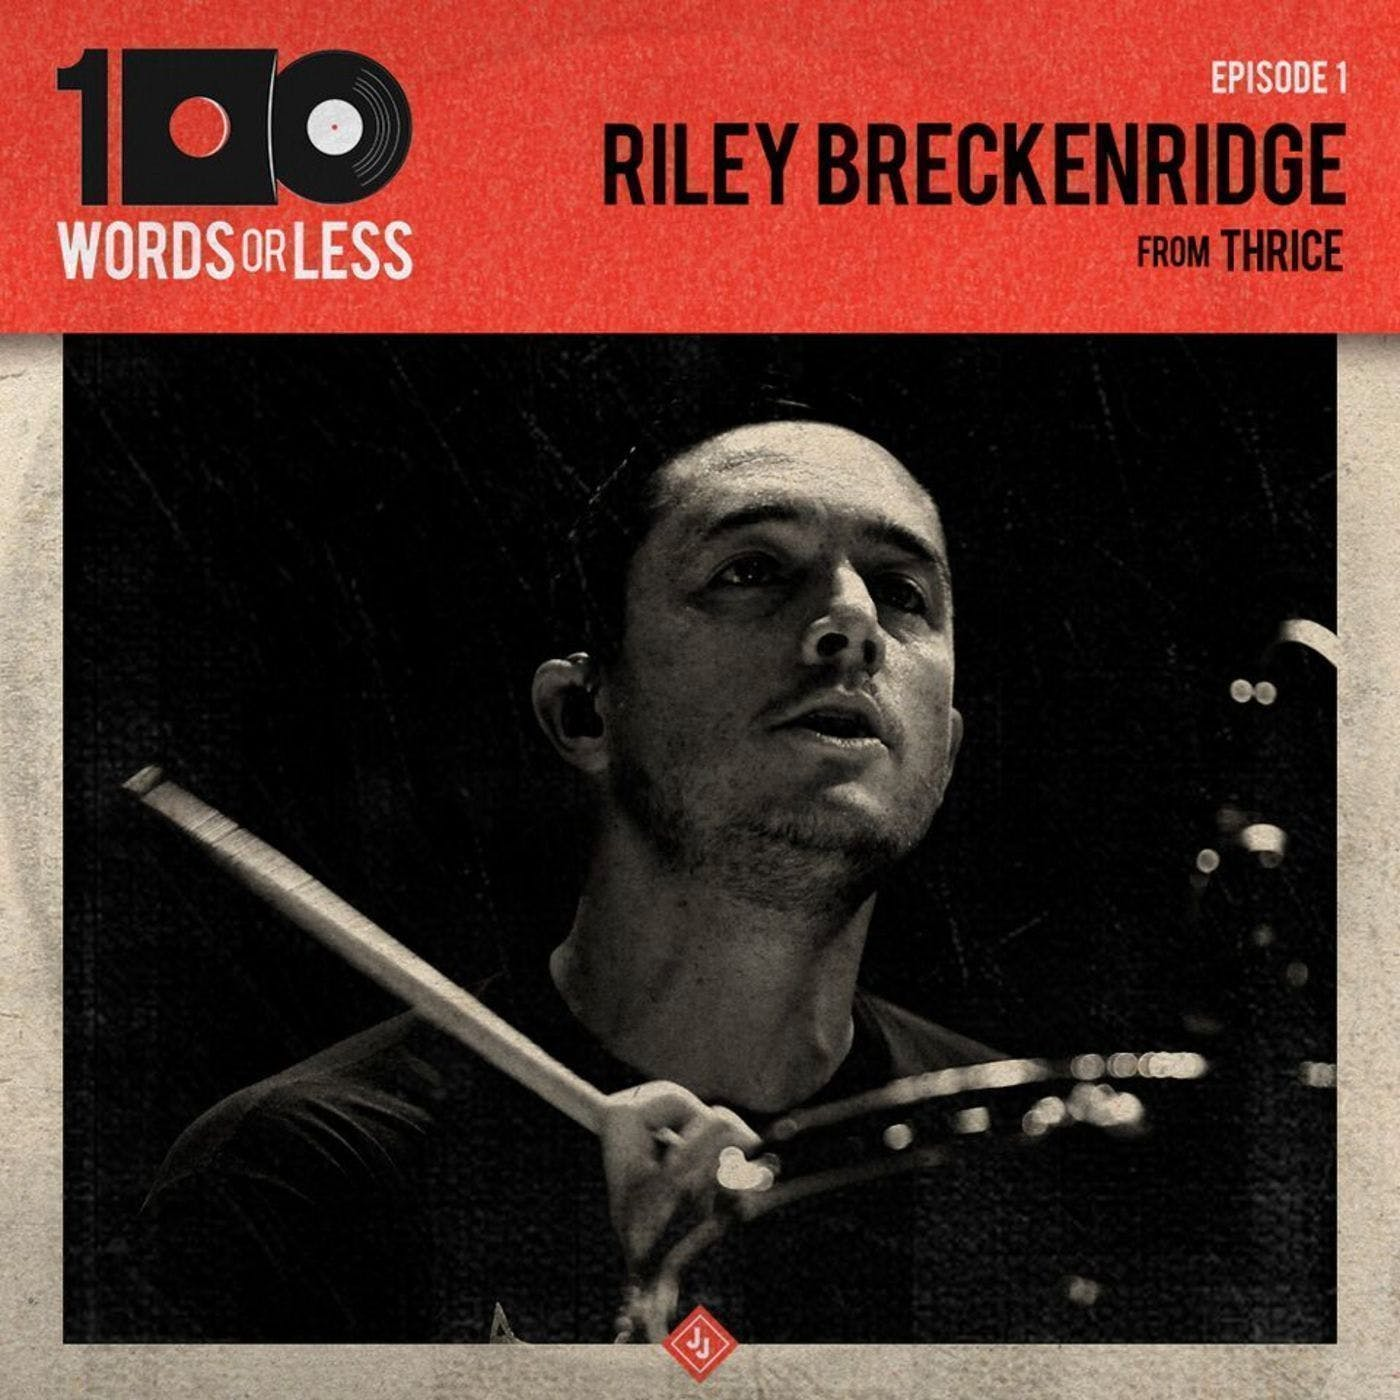 Riley Breckenridge from Thrice